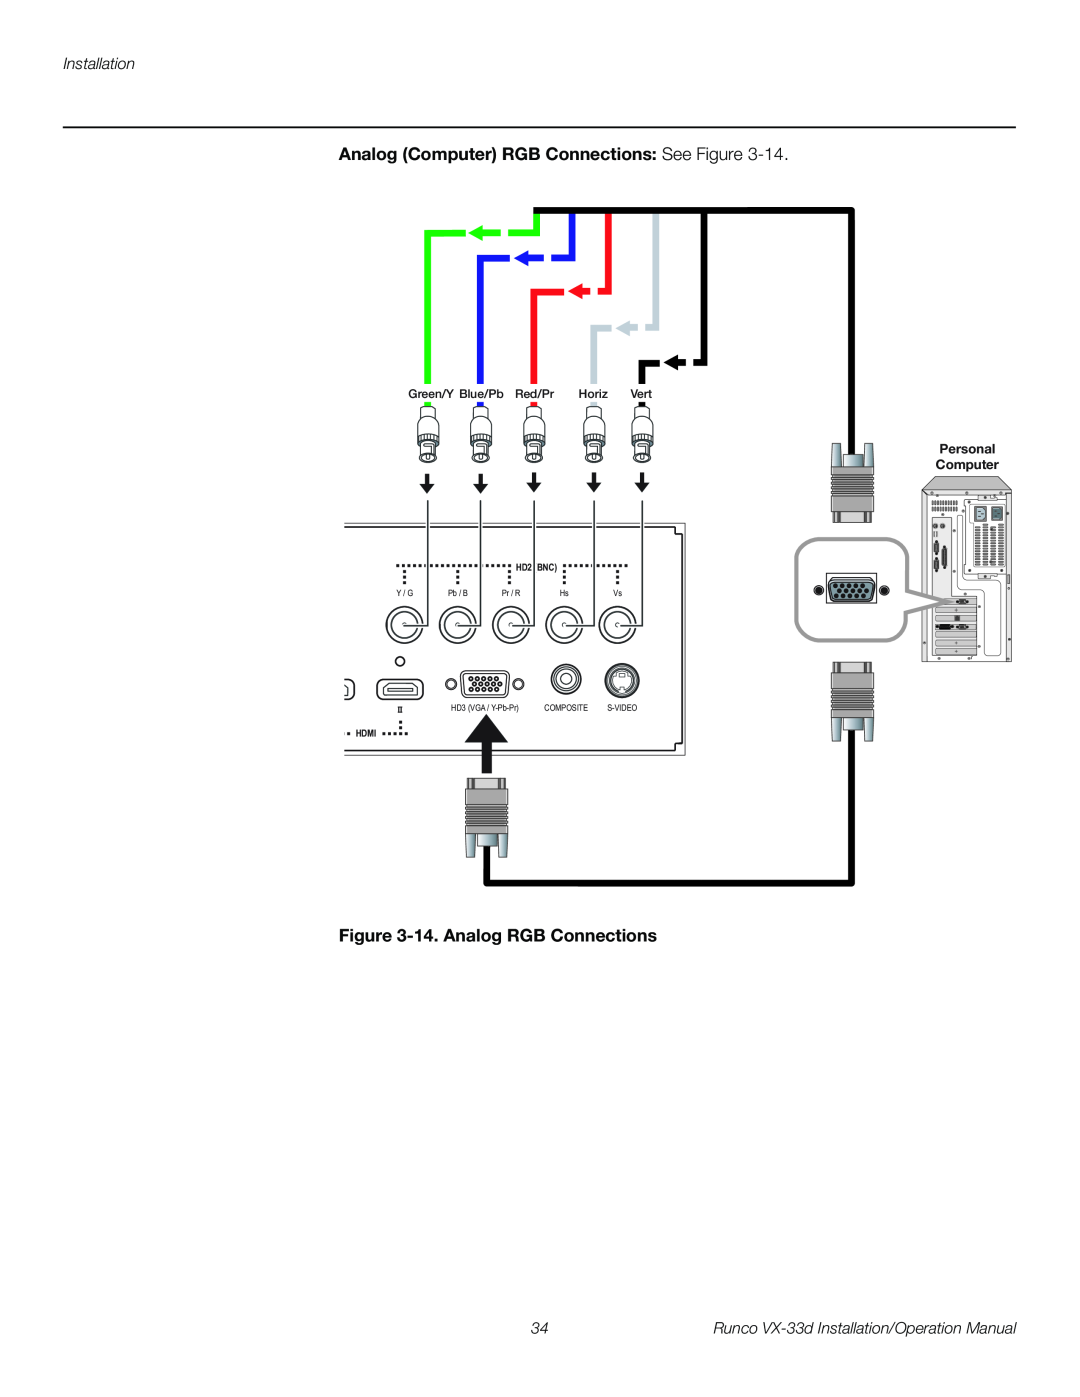 Runco VX-33D Analog Computer RGB Connections See Figure, 14. Analog RGB Connections, Installation, Personal Computer, Vert 